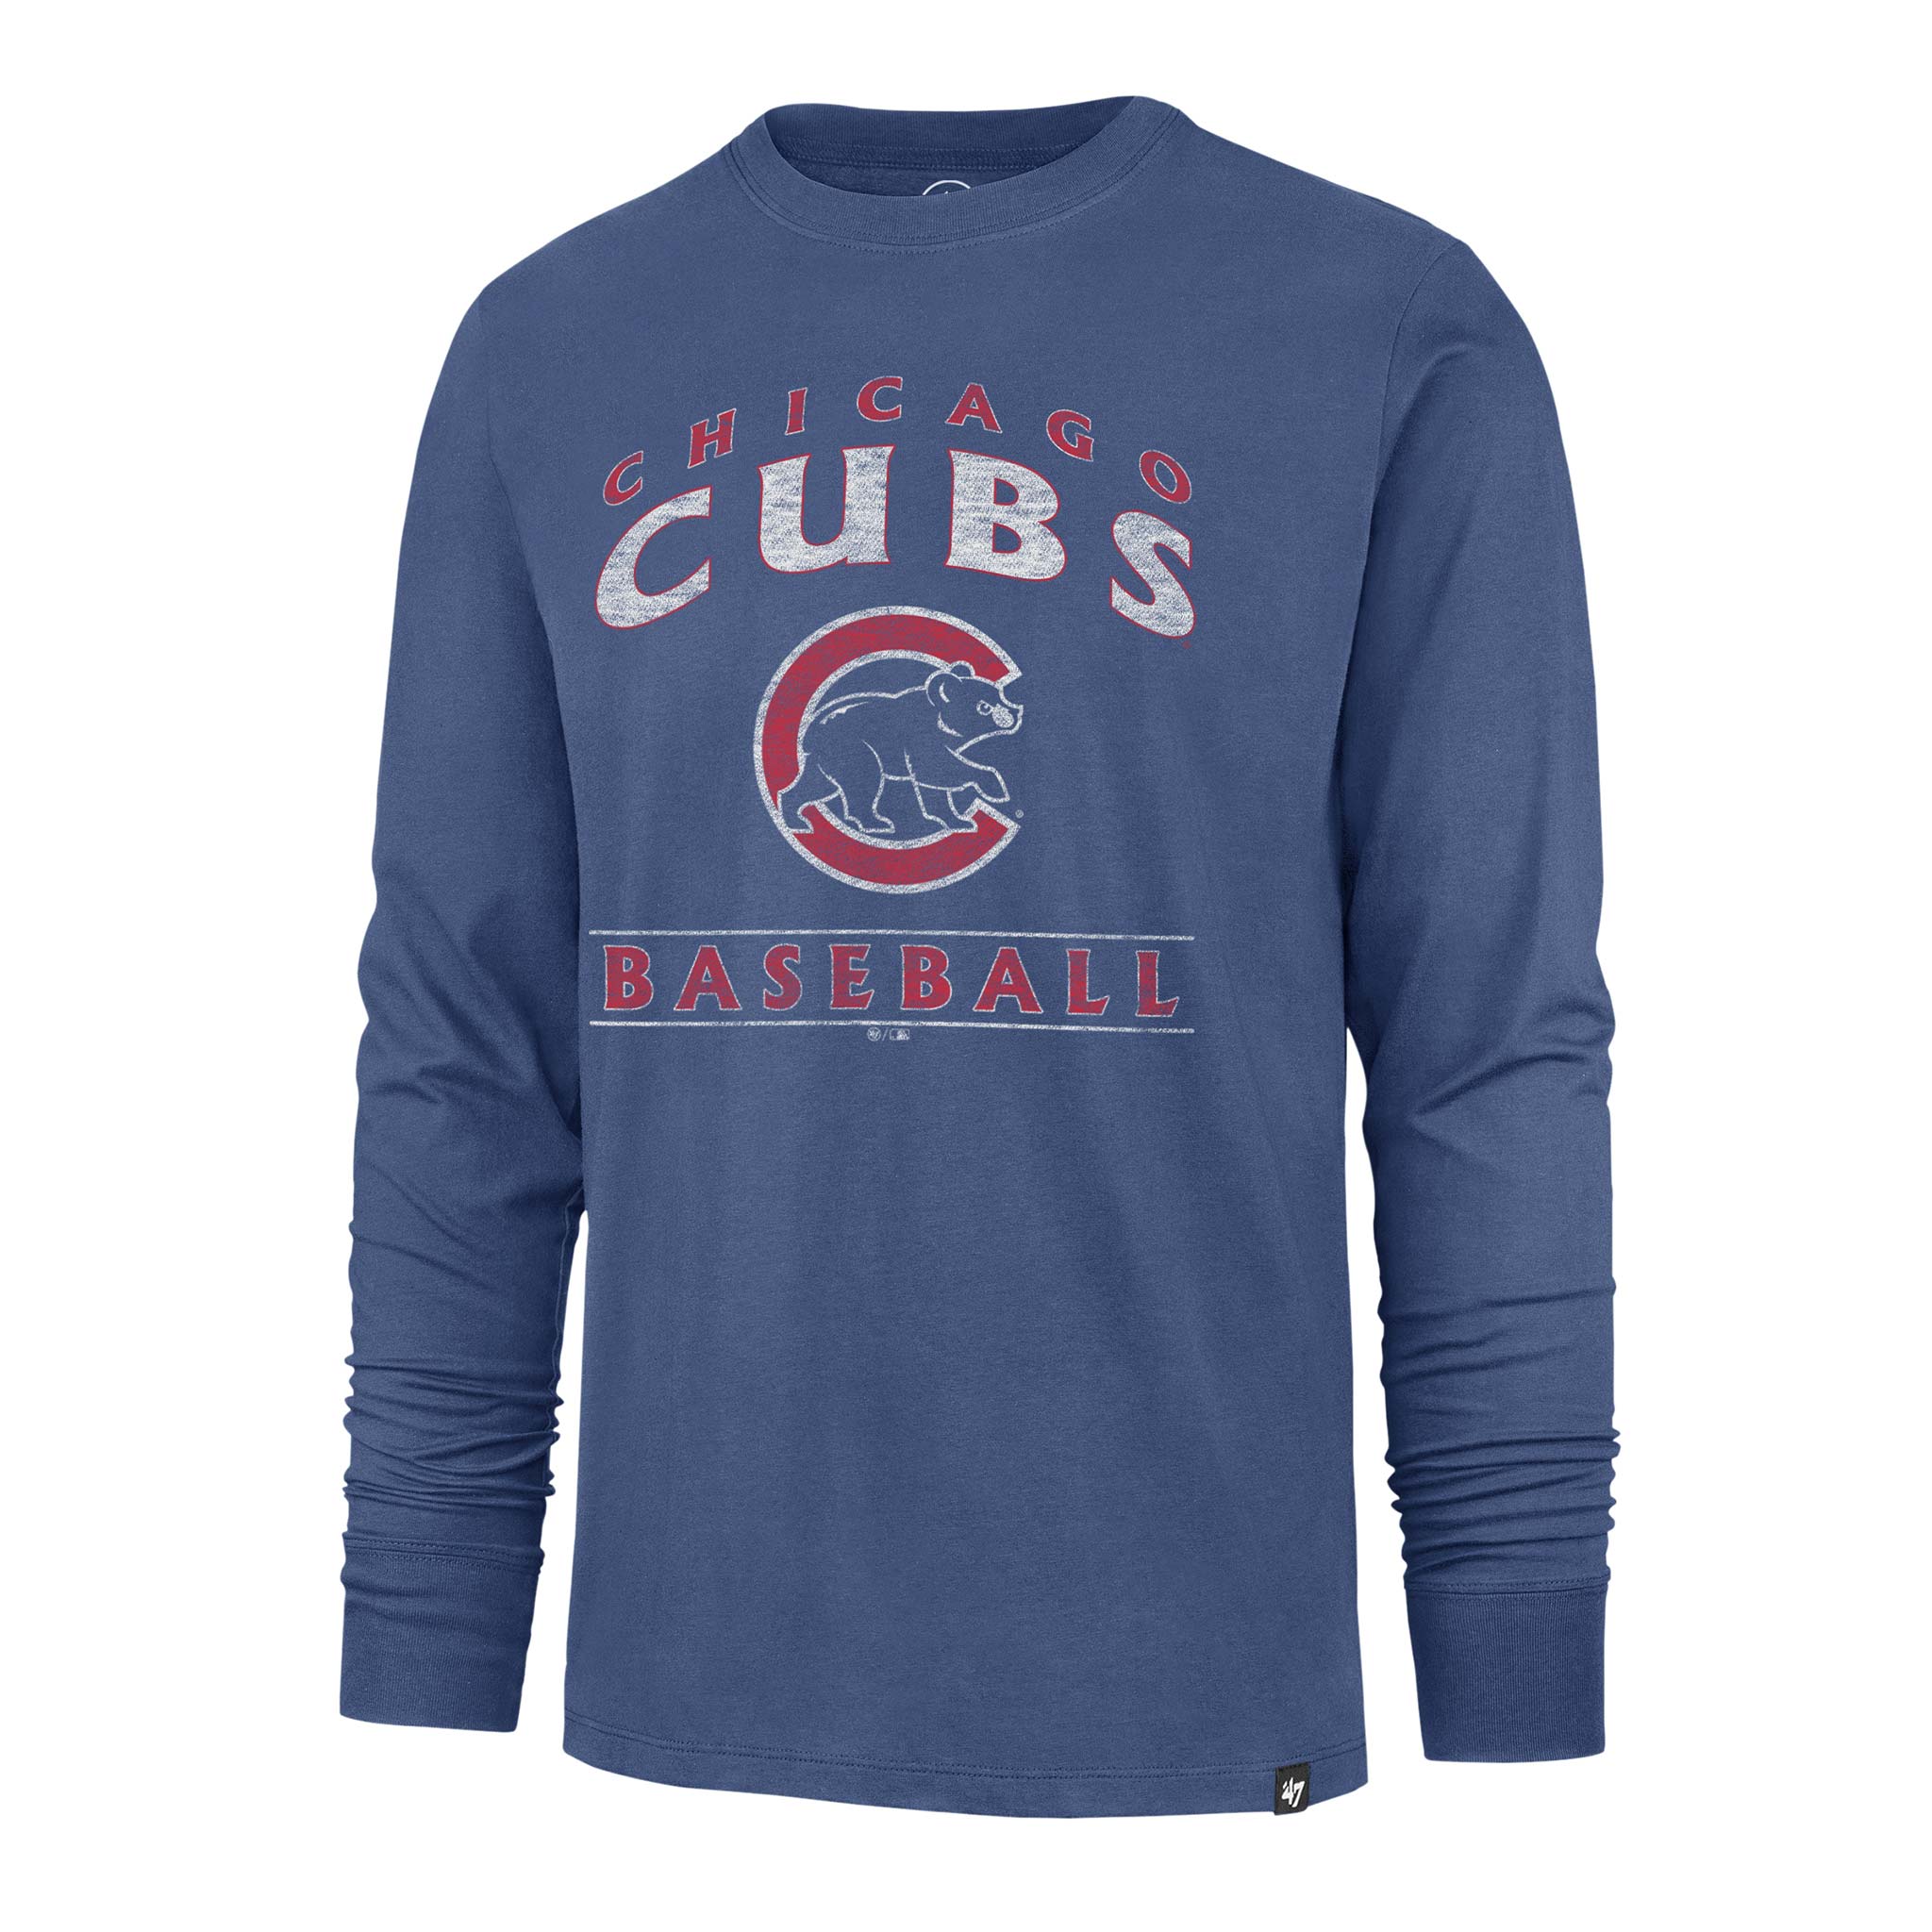 Cubs Baseball 47 Brand Dissipate Long Sleeve Shirt, Medium, Blue